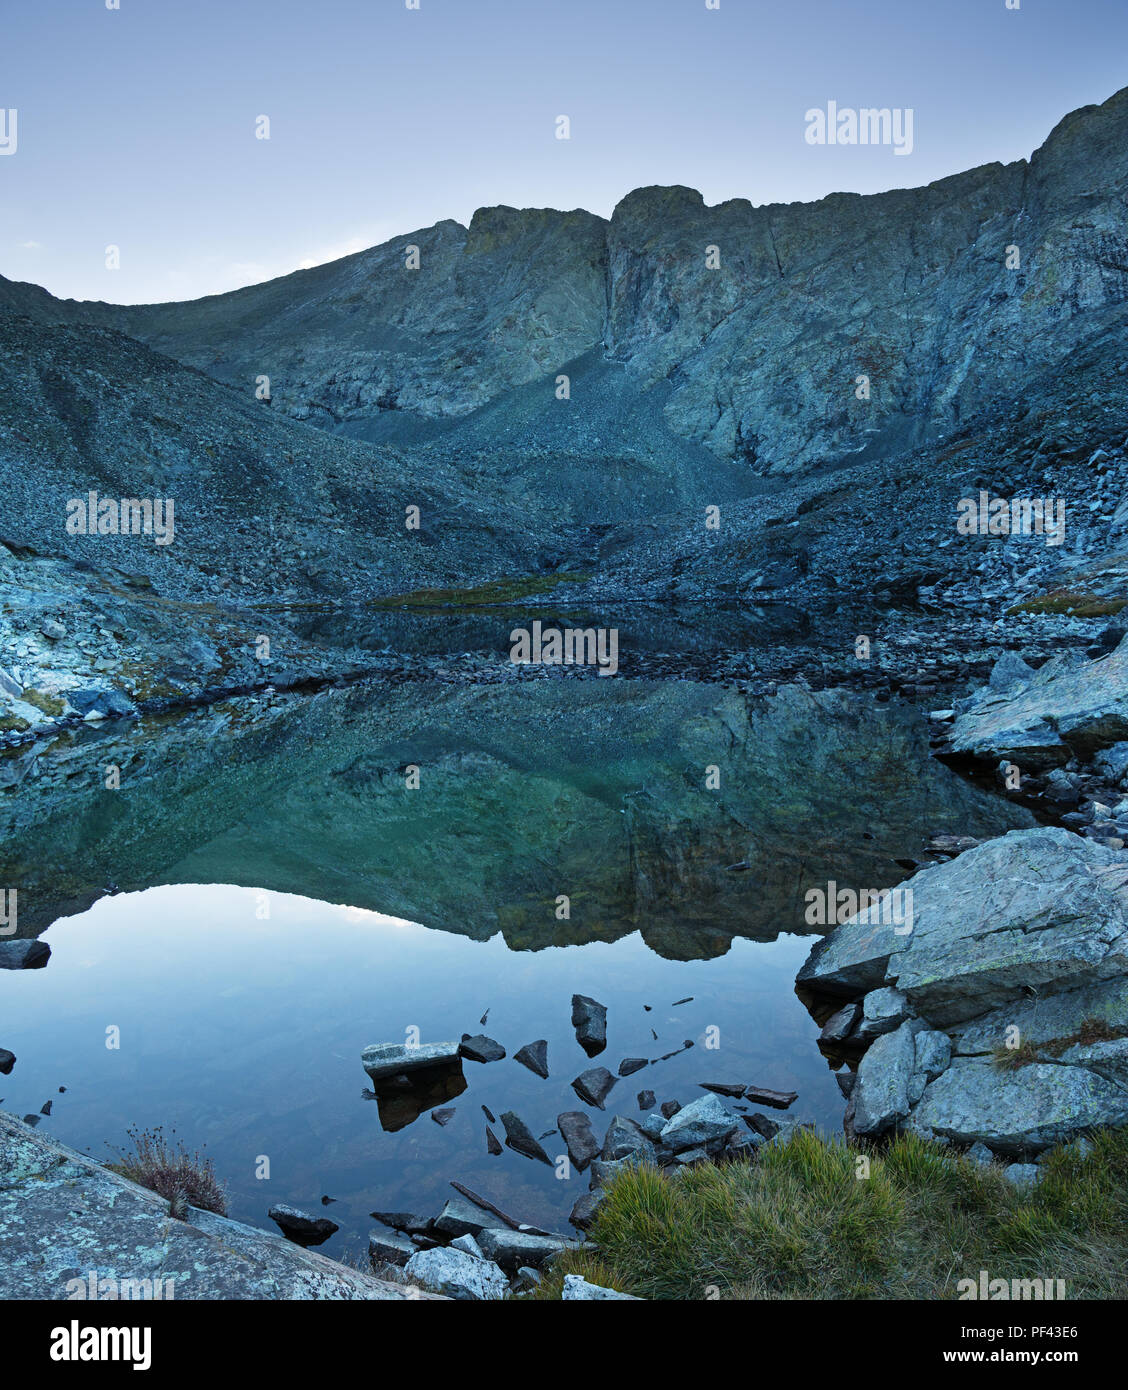 Pico blanca refleja todavía en un lago de montaña Foto de stock